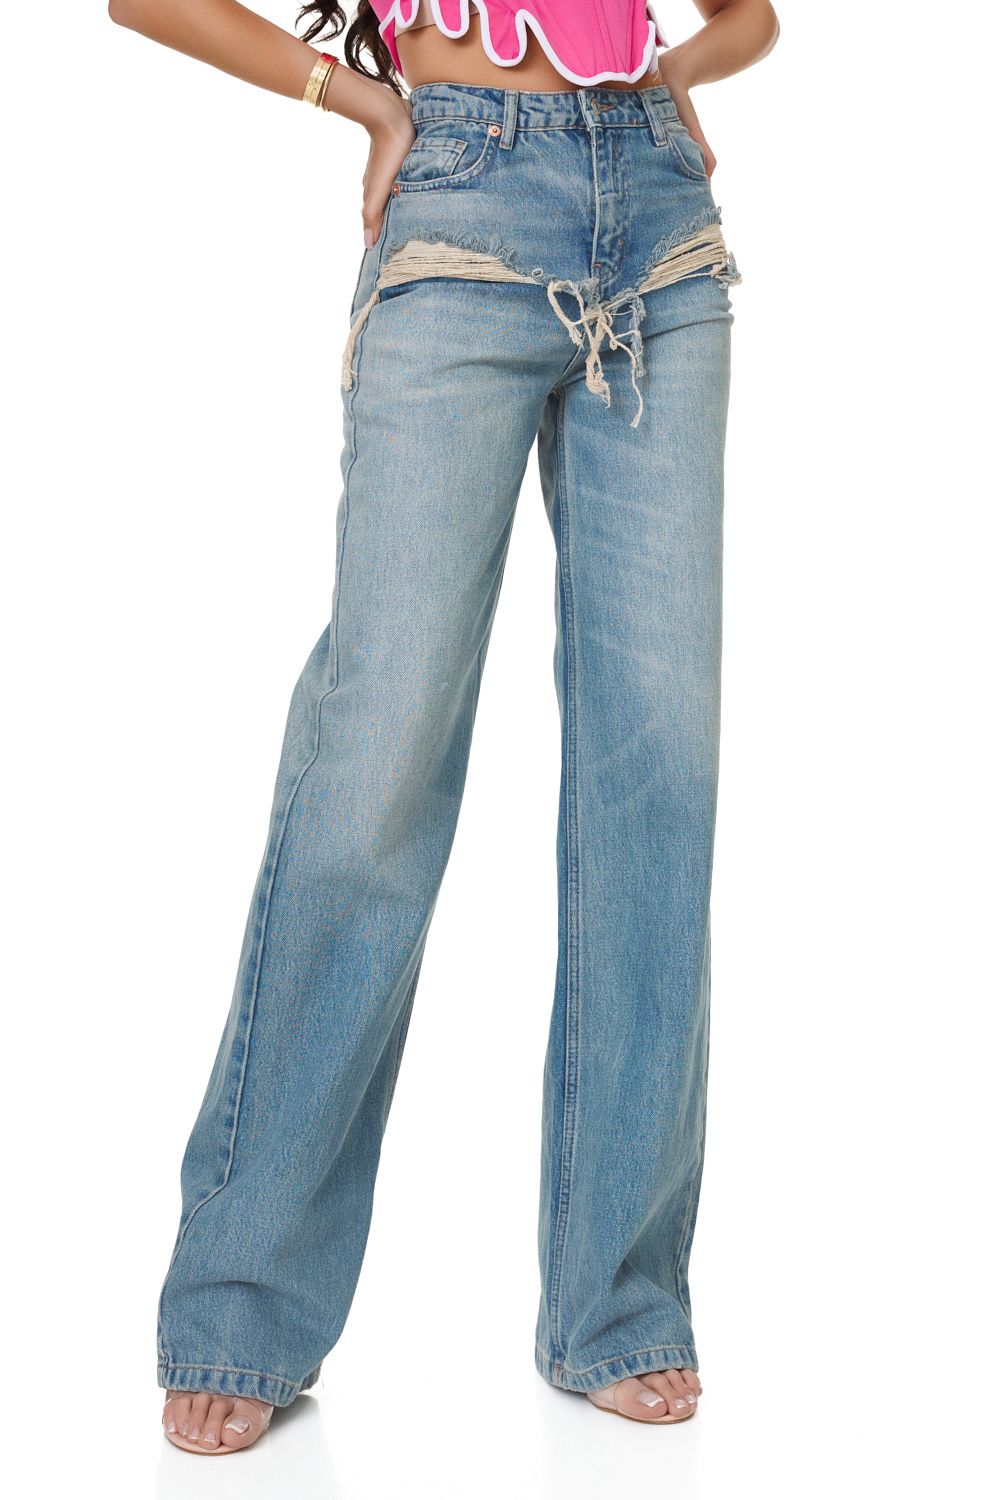 Sistoni Bogas casual blue ladies jeans